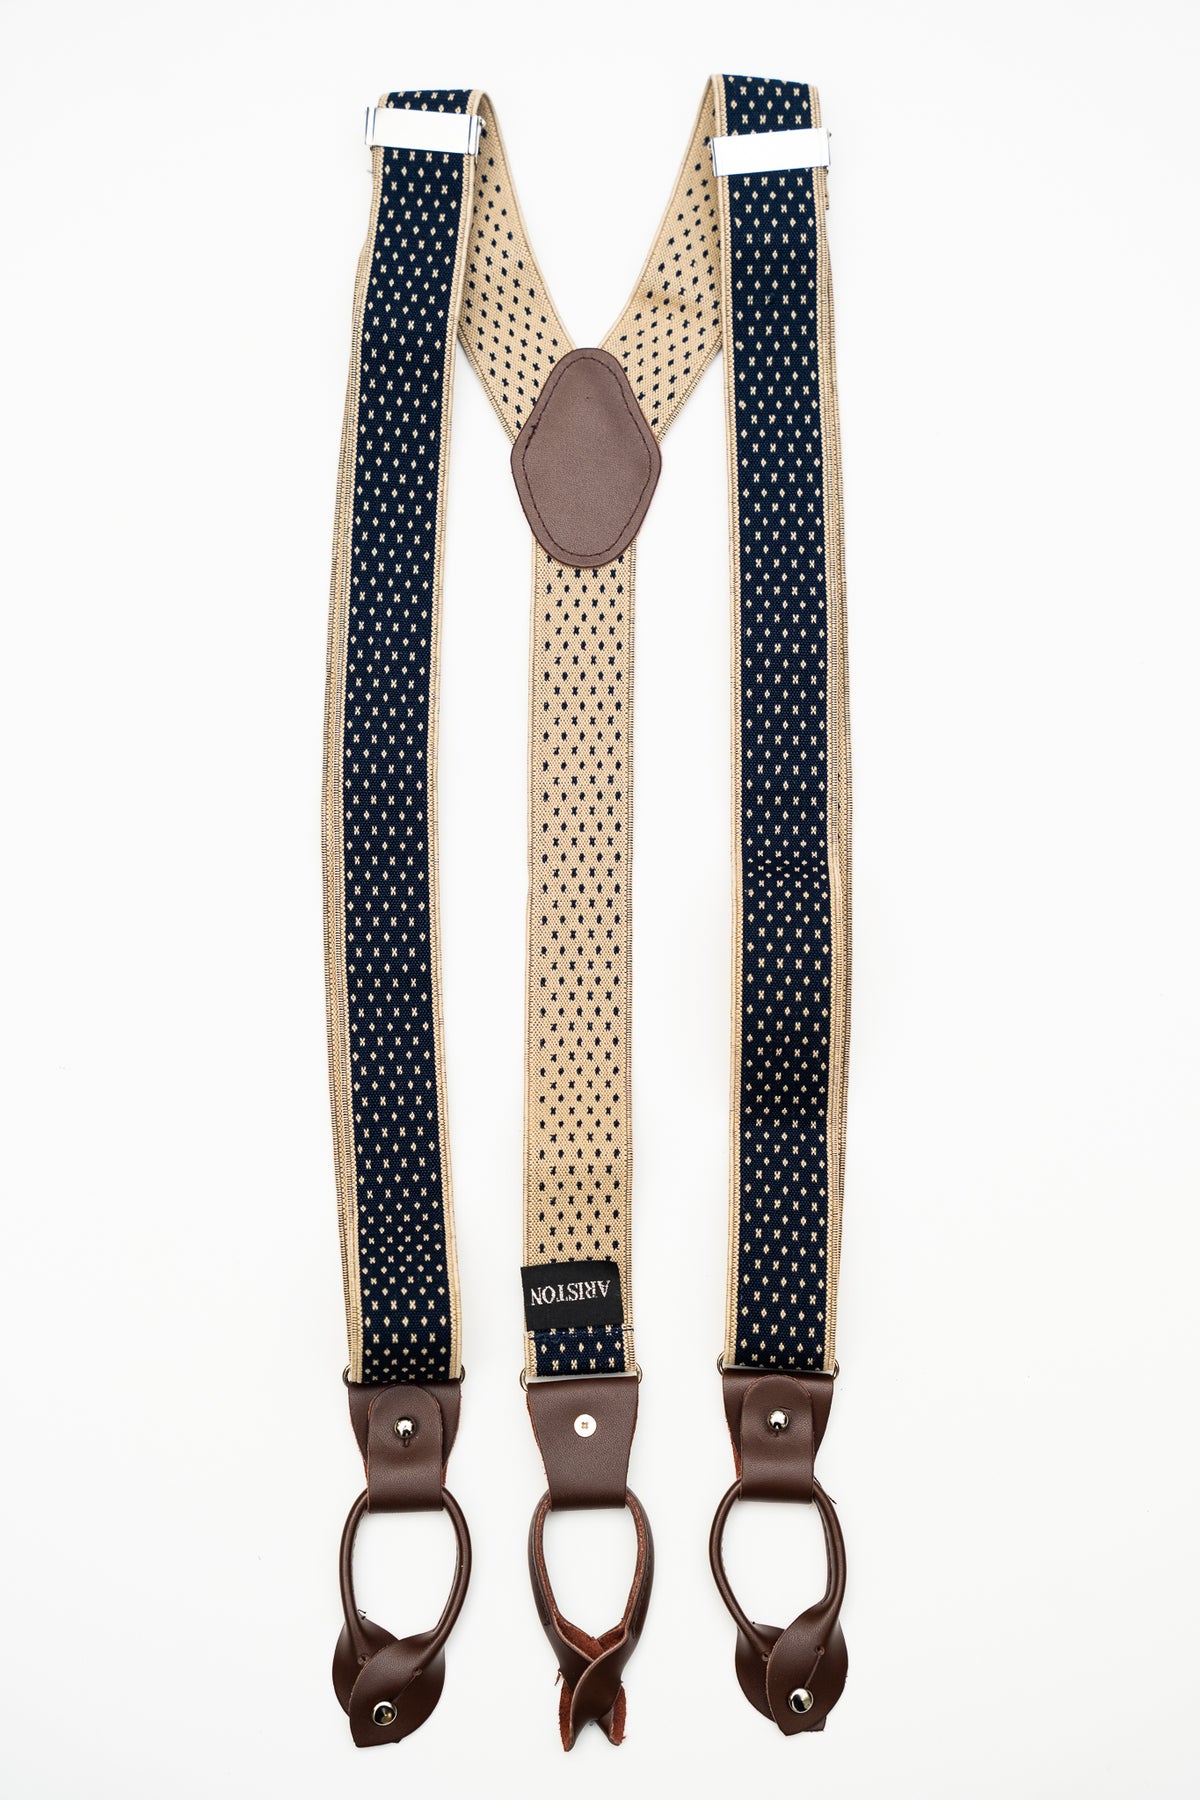 AR Navy Tan Suspenders - The Suit Depot